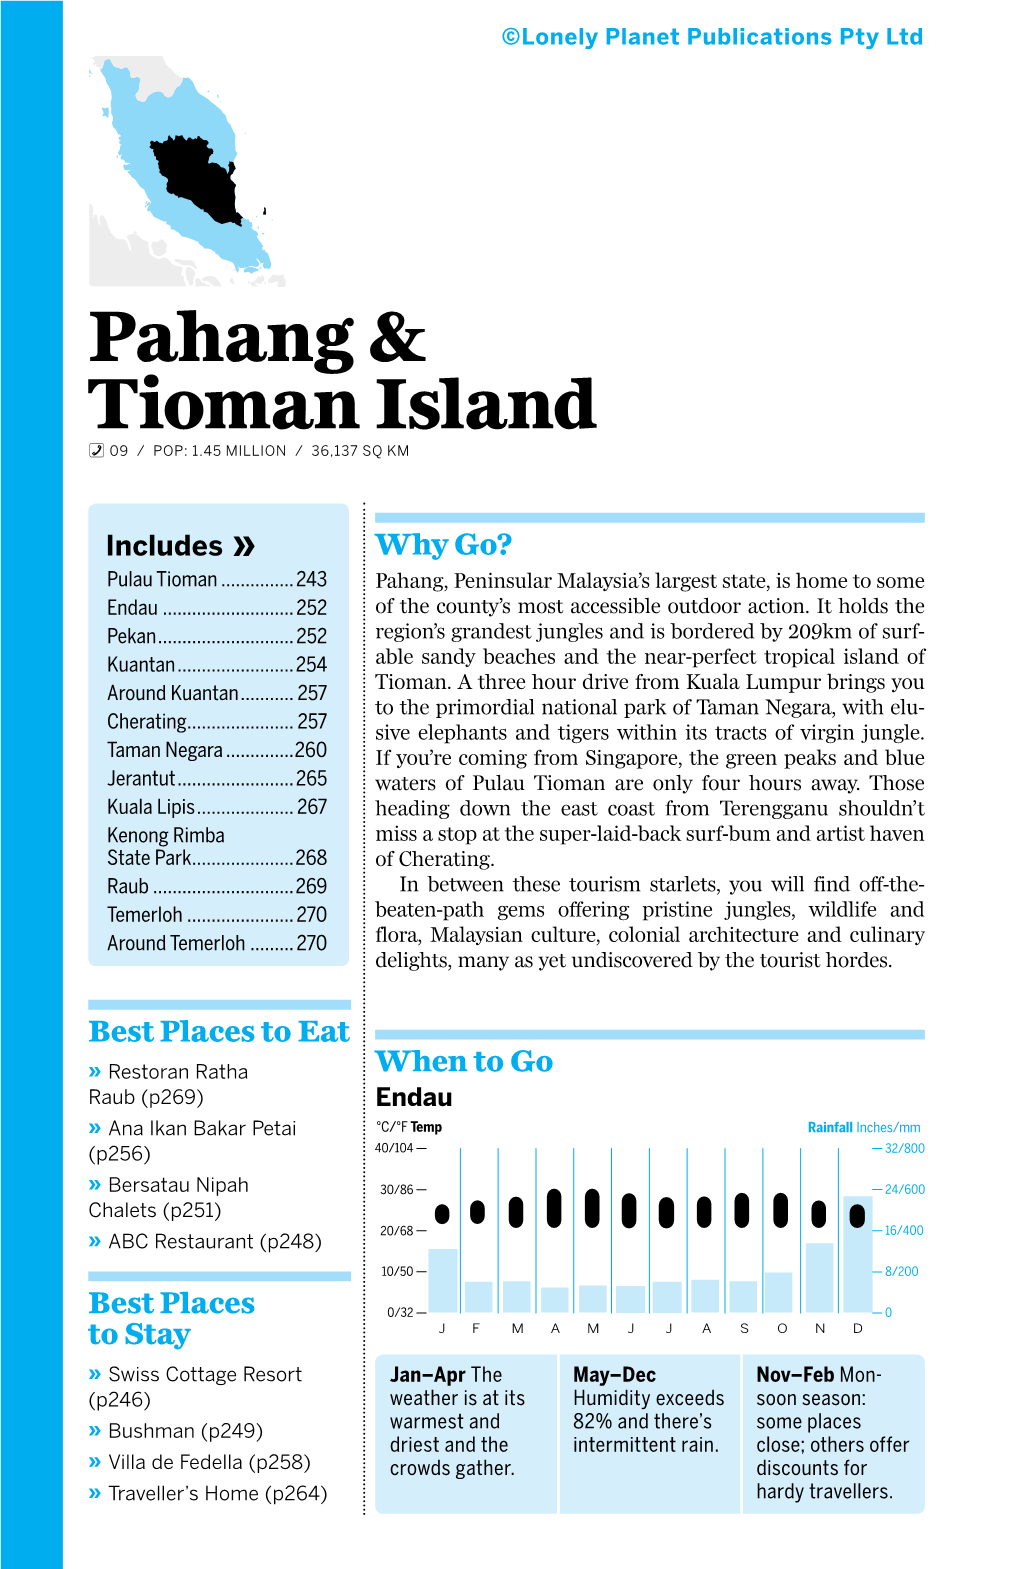 Pahang & Tioman Island